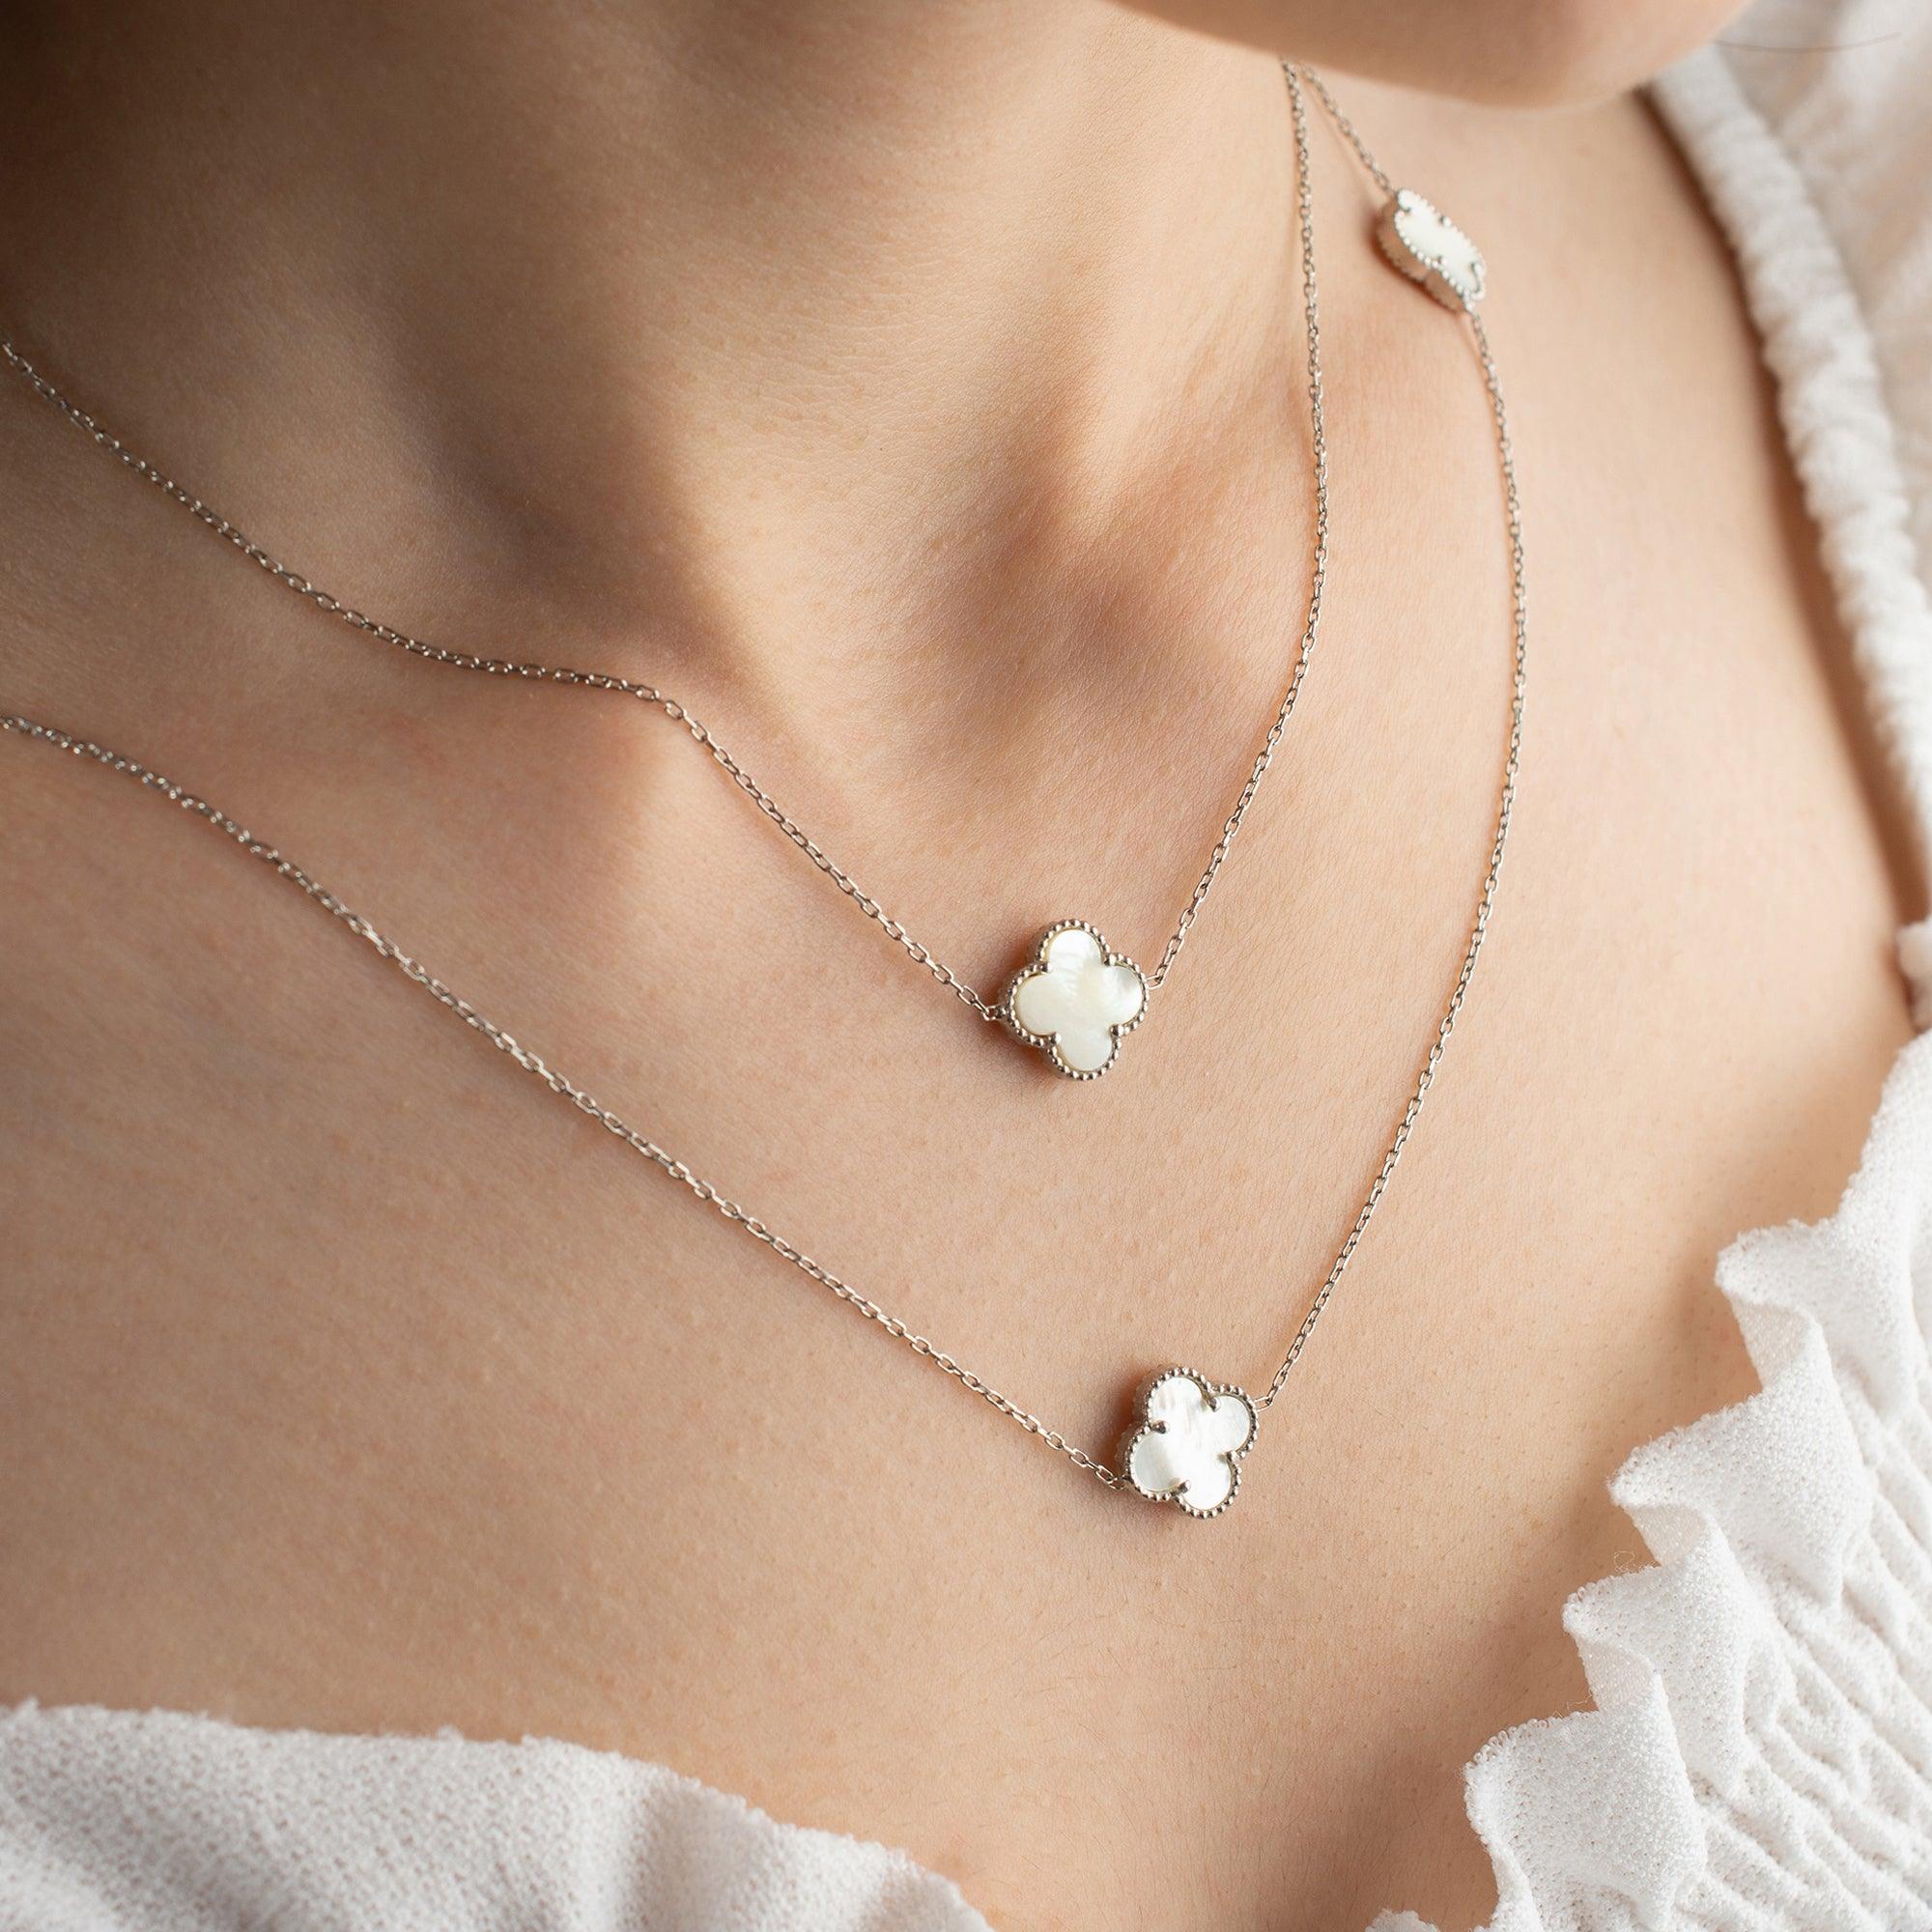 Gold Van Cleef Necklace • Van Cleef Clover Necklace • Gift For Her - Trending Silver Gifts